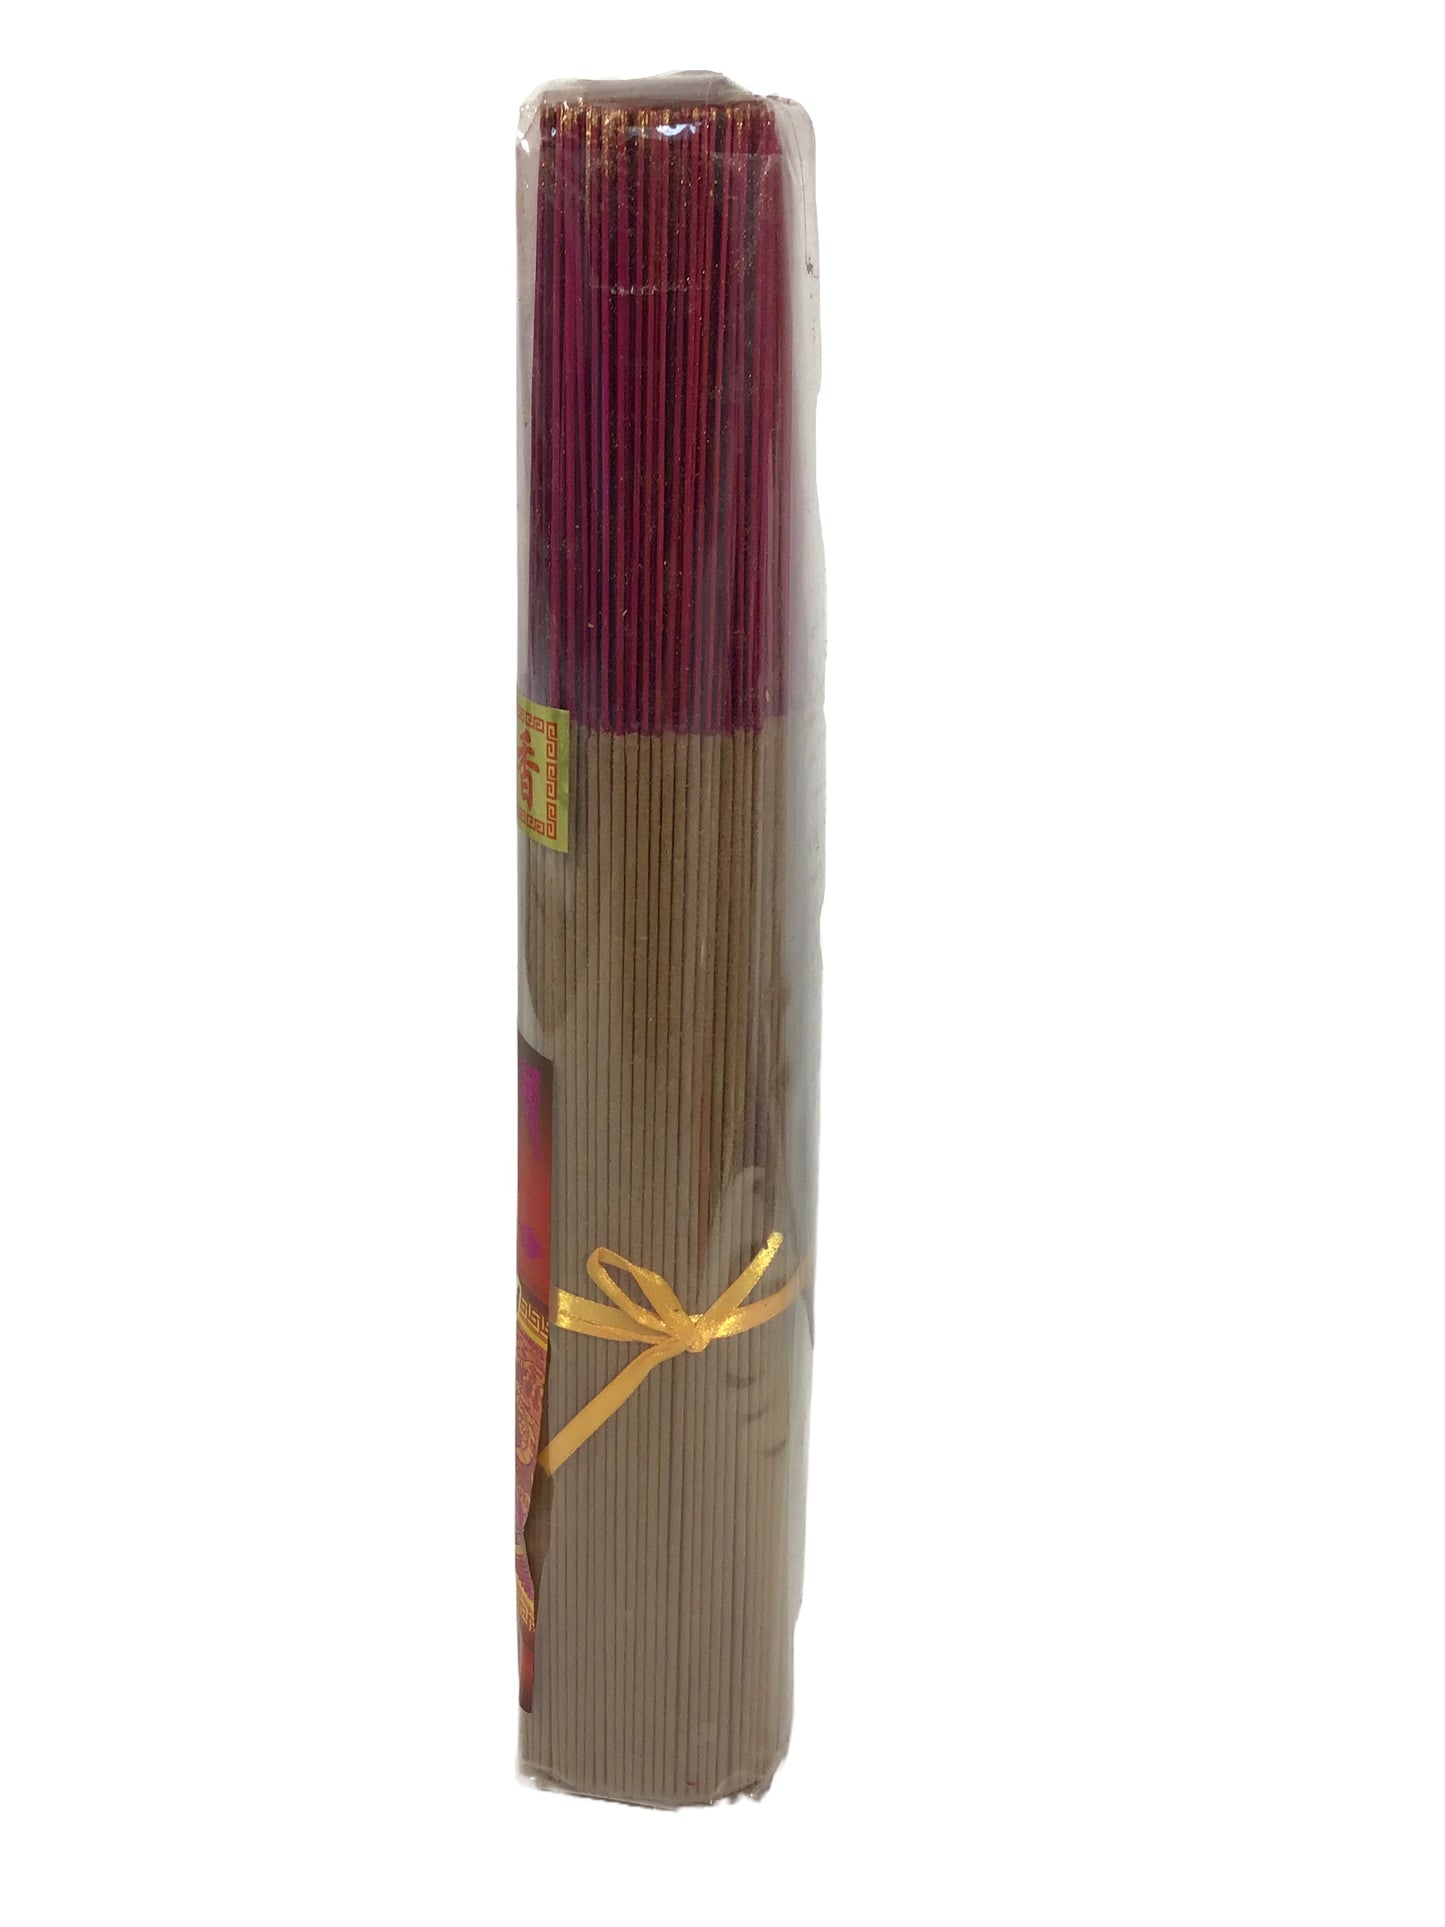 Premium Old Wood Sandalwood Joss Incense Sticks 32cm Long About 550 Sticks 老山檀香 百年经典 纯檀香